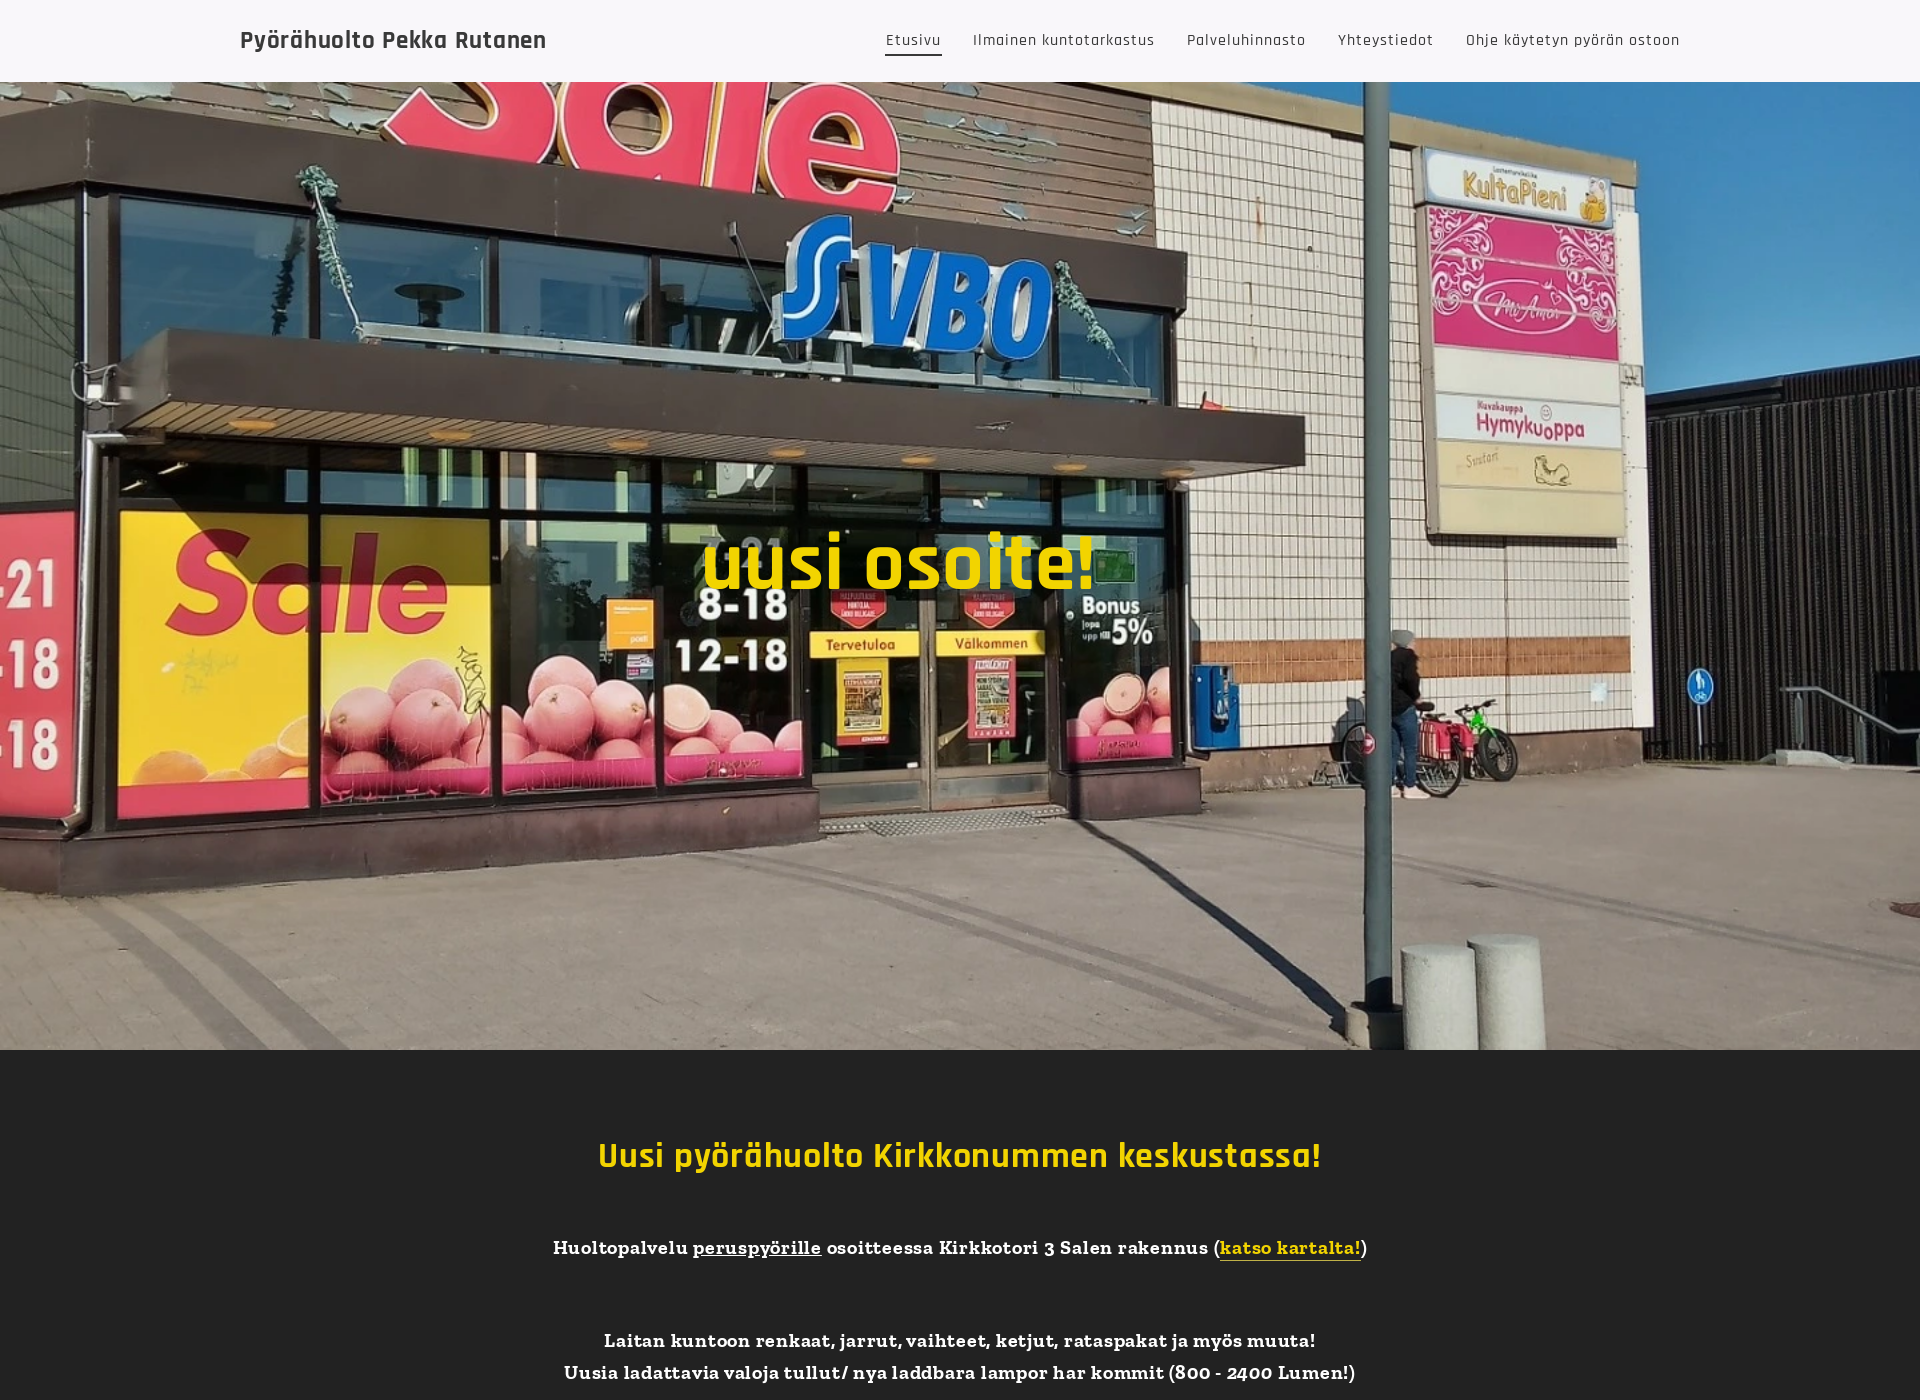 Screenshot for pyorahuolto-pekka-rutanen.fi